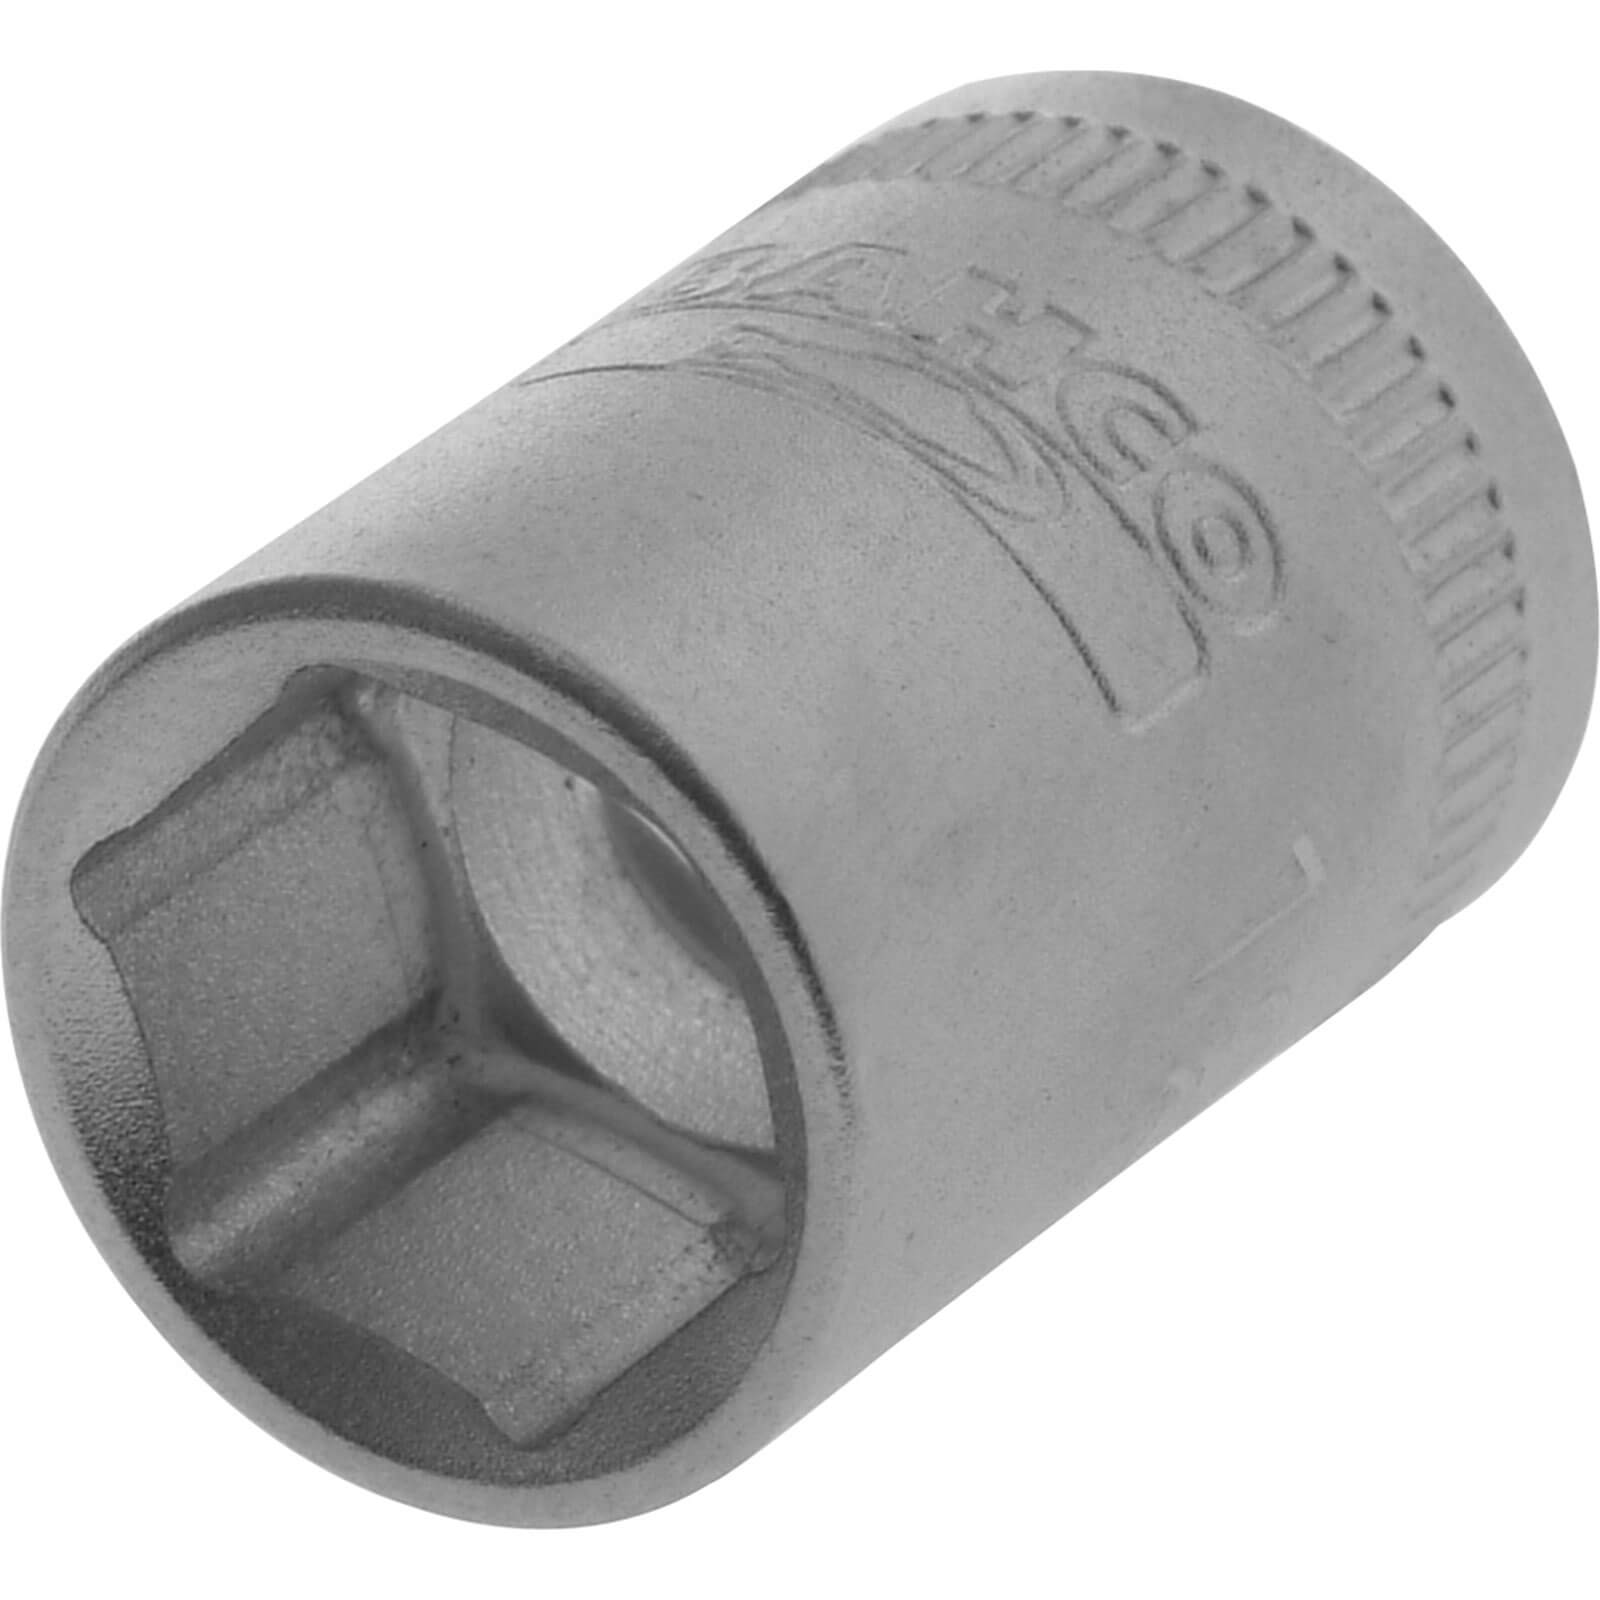 Image of Bahco 3/8" Drive Hexagon Socket Metric 3/8" 19mm